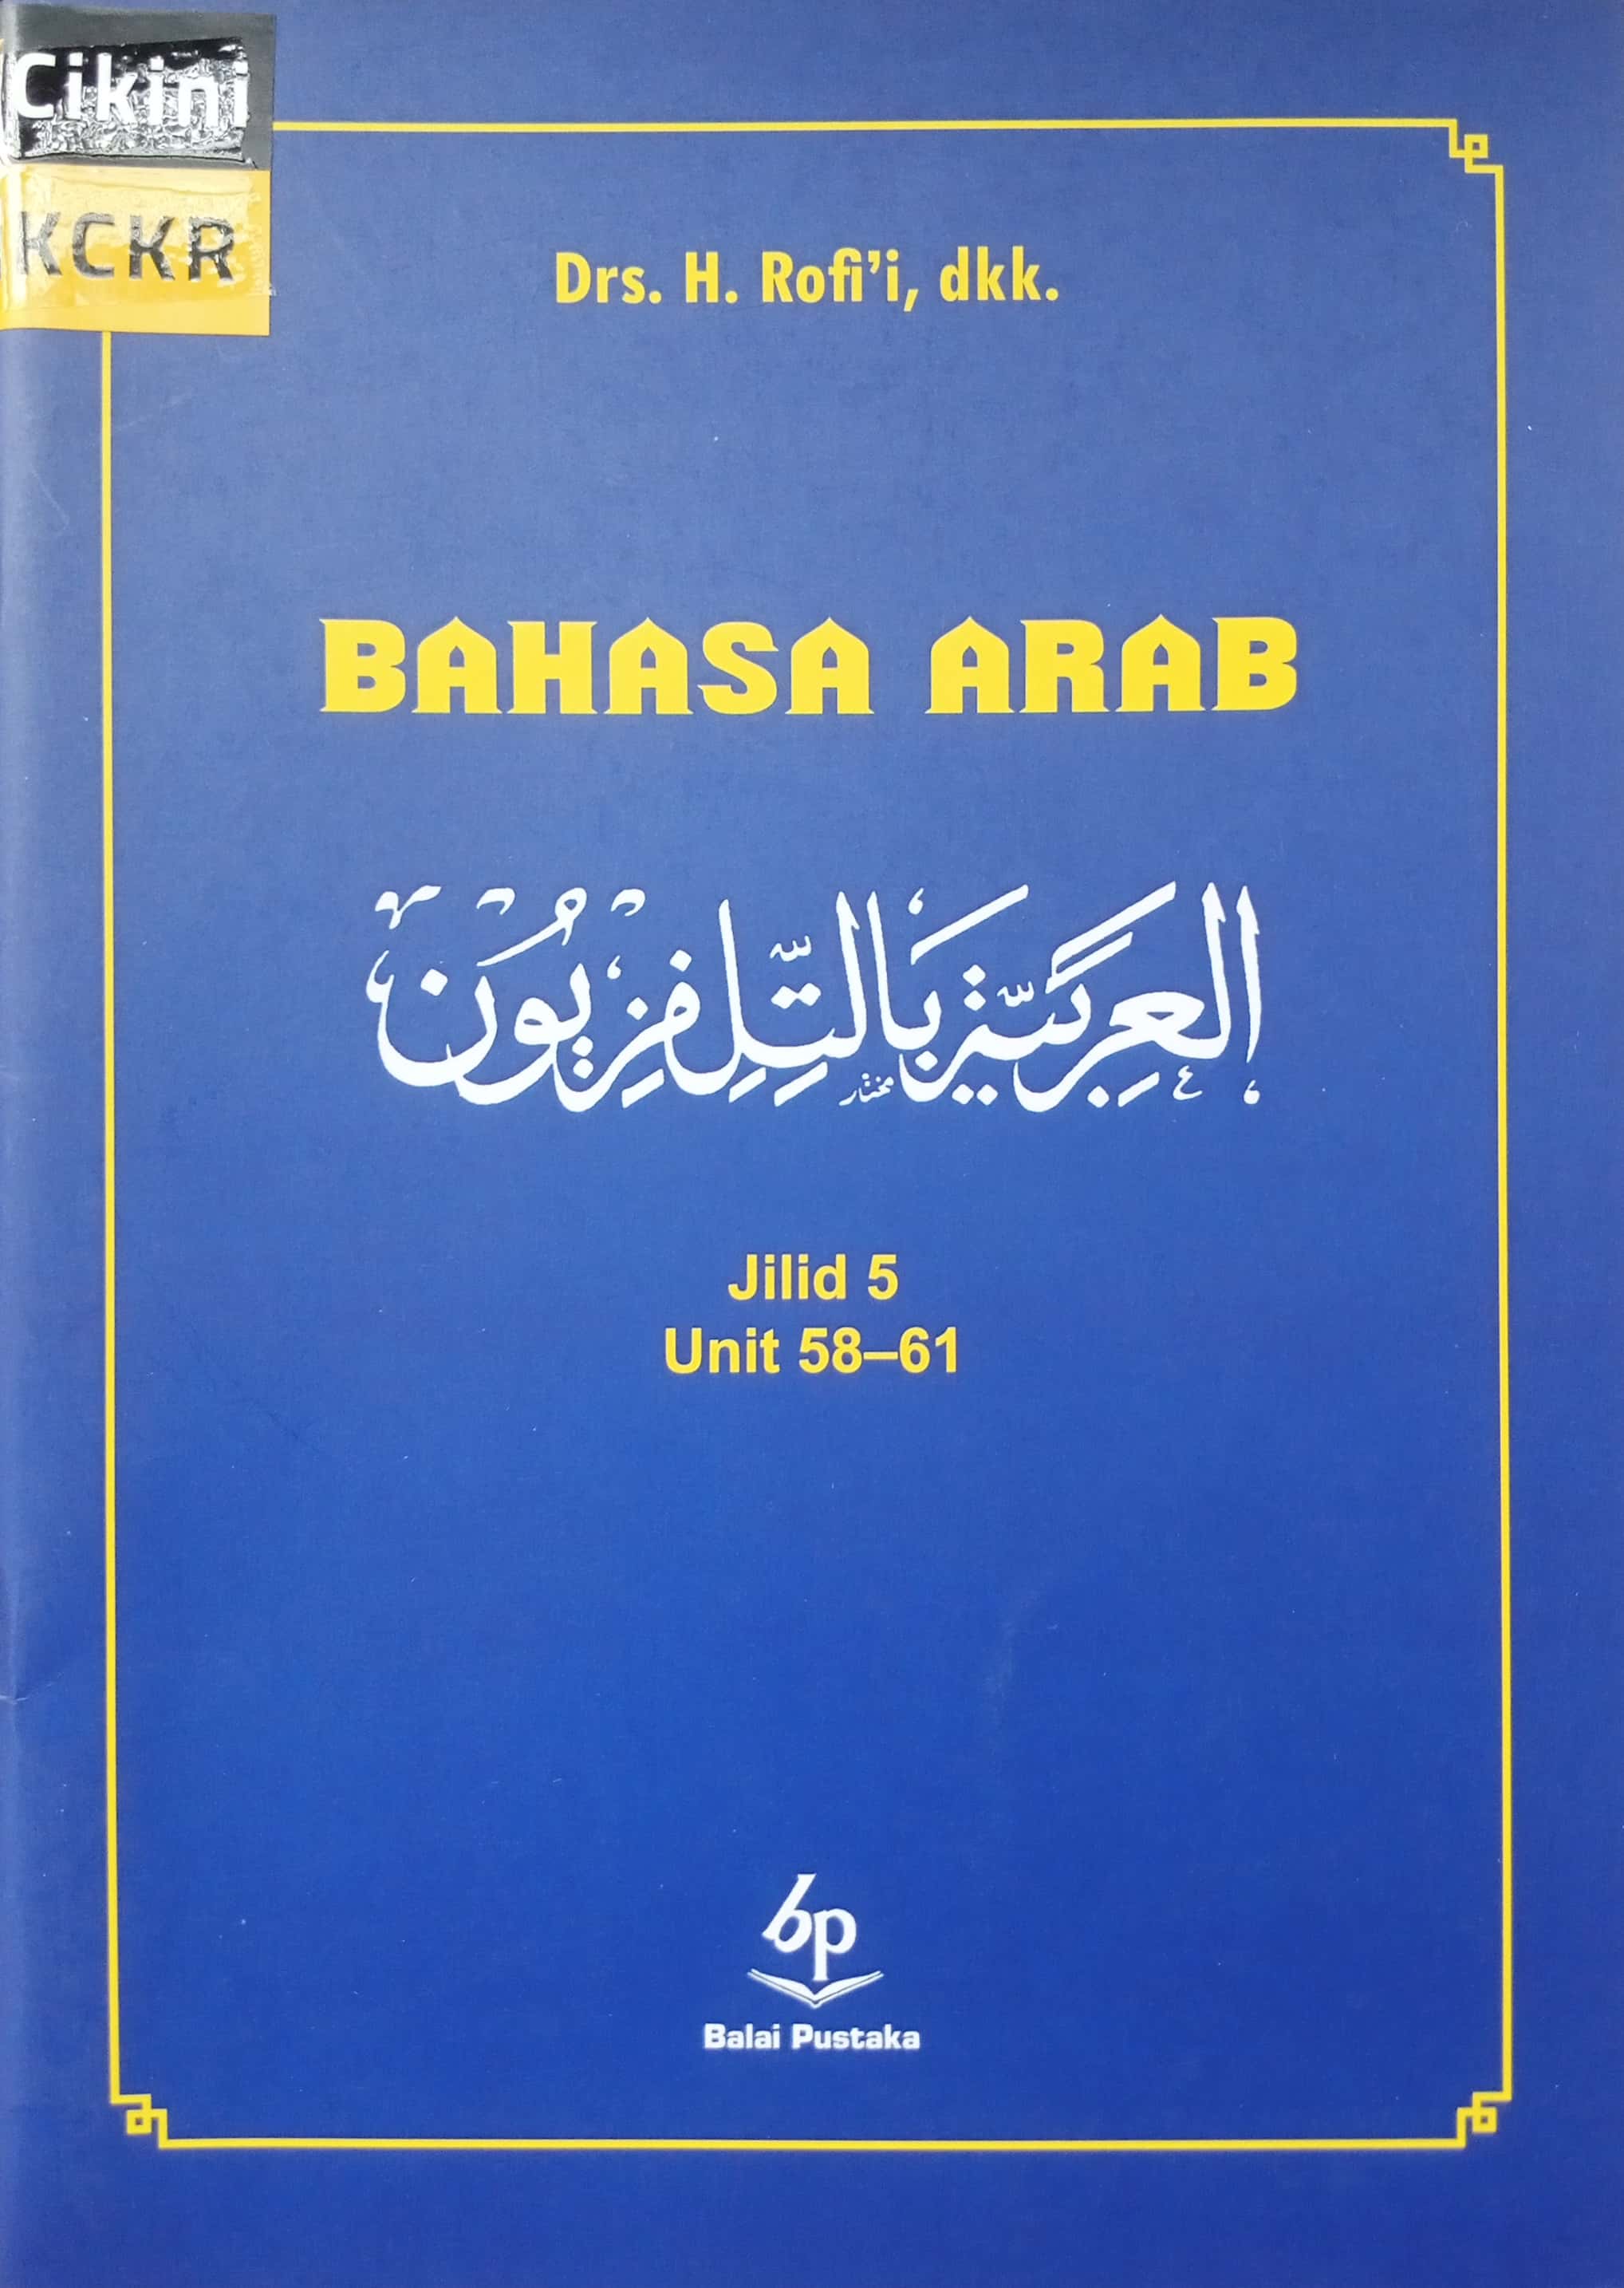 Bahasa Arab jilid 5 unit 58-61